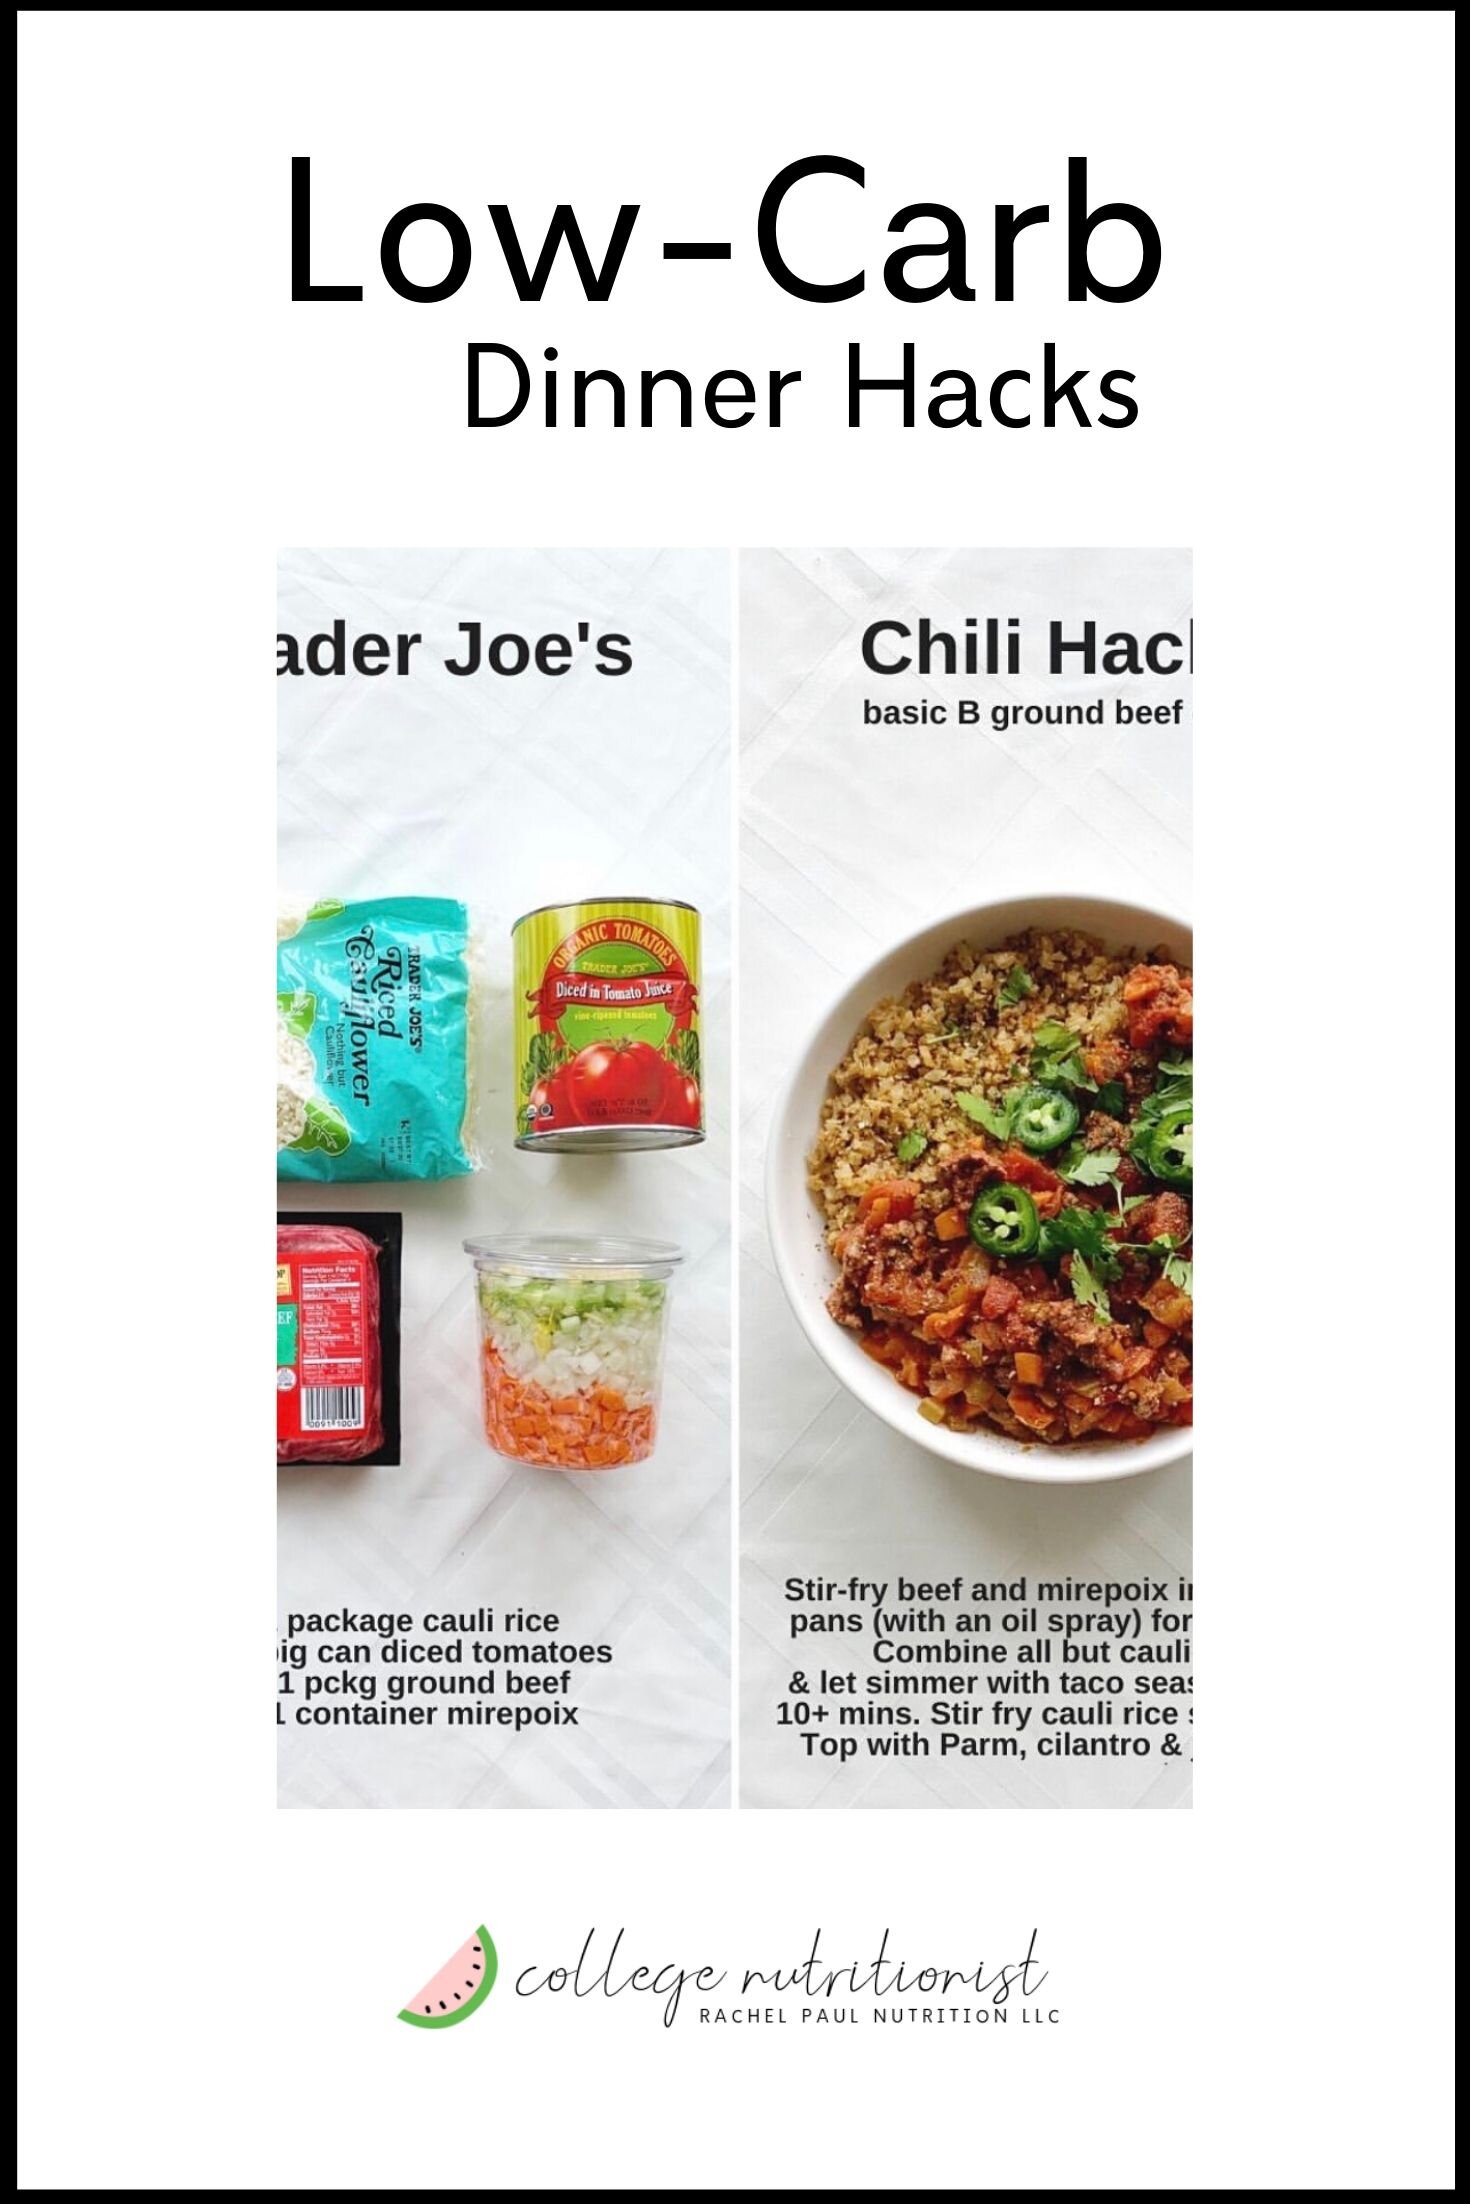 Trader Joe's Low-Carb Dinner Hacks